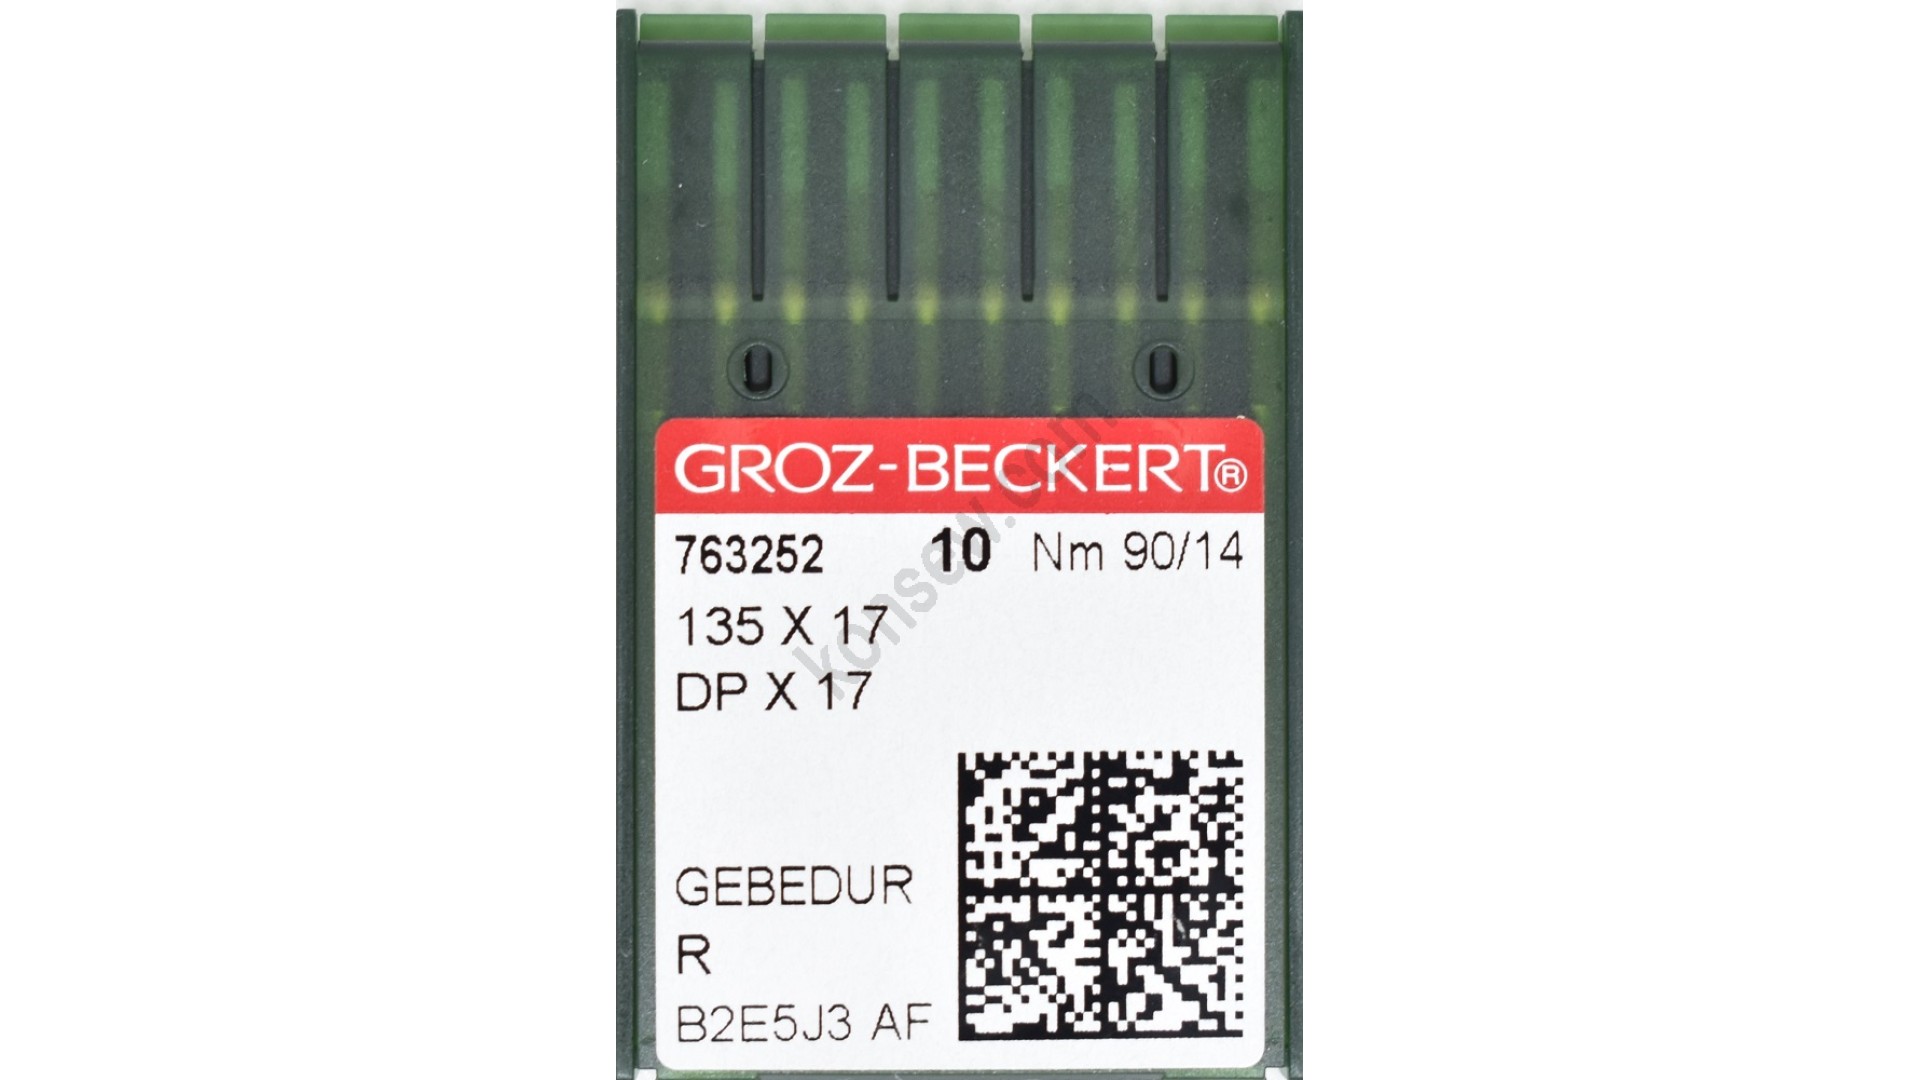 18/110 100 GROZ-BECKERT GEBEDUR 135X17 DPX17 Titanium Sewing Machine Needles GROZ-BECKERT Needle 